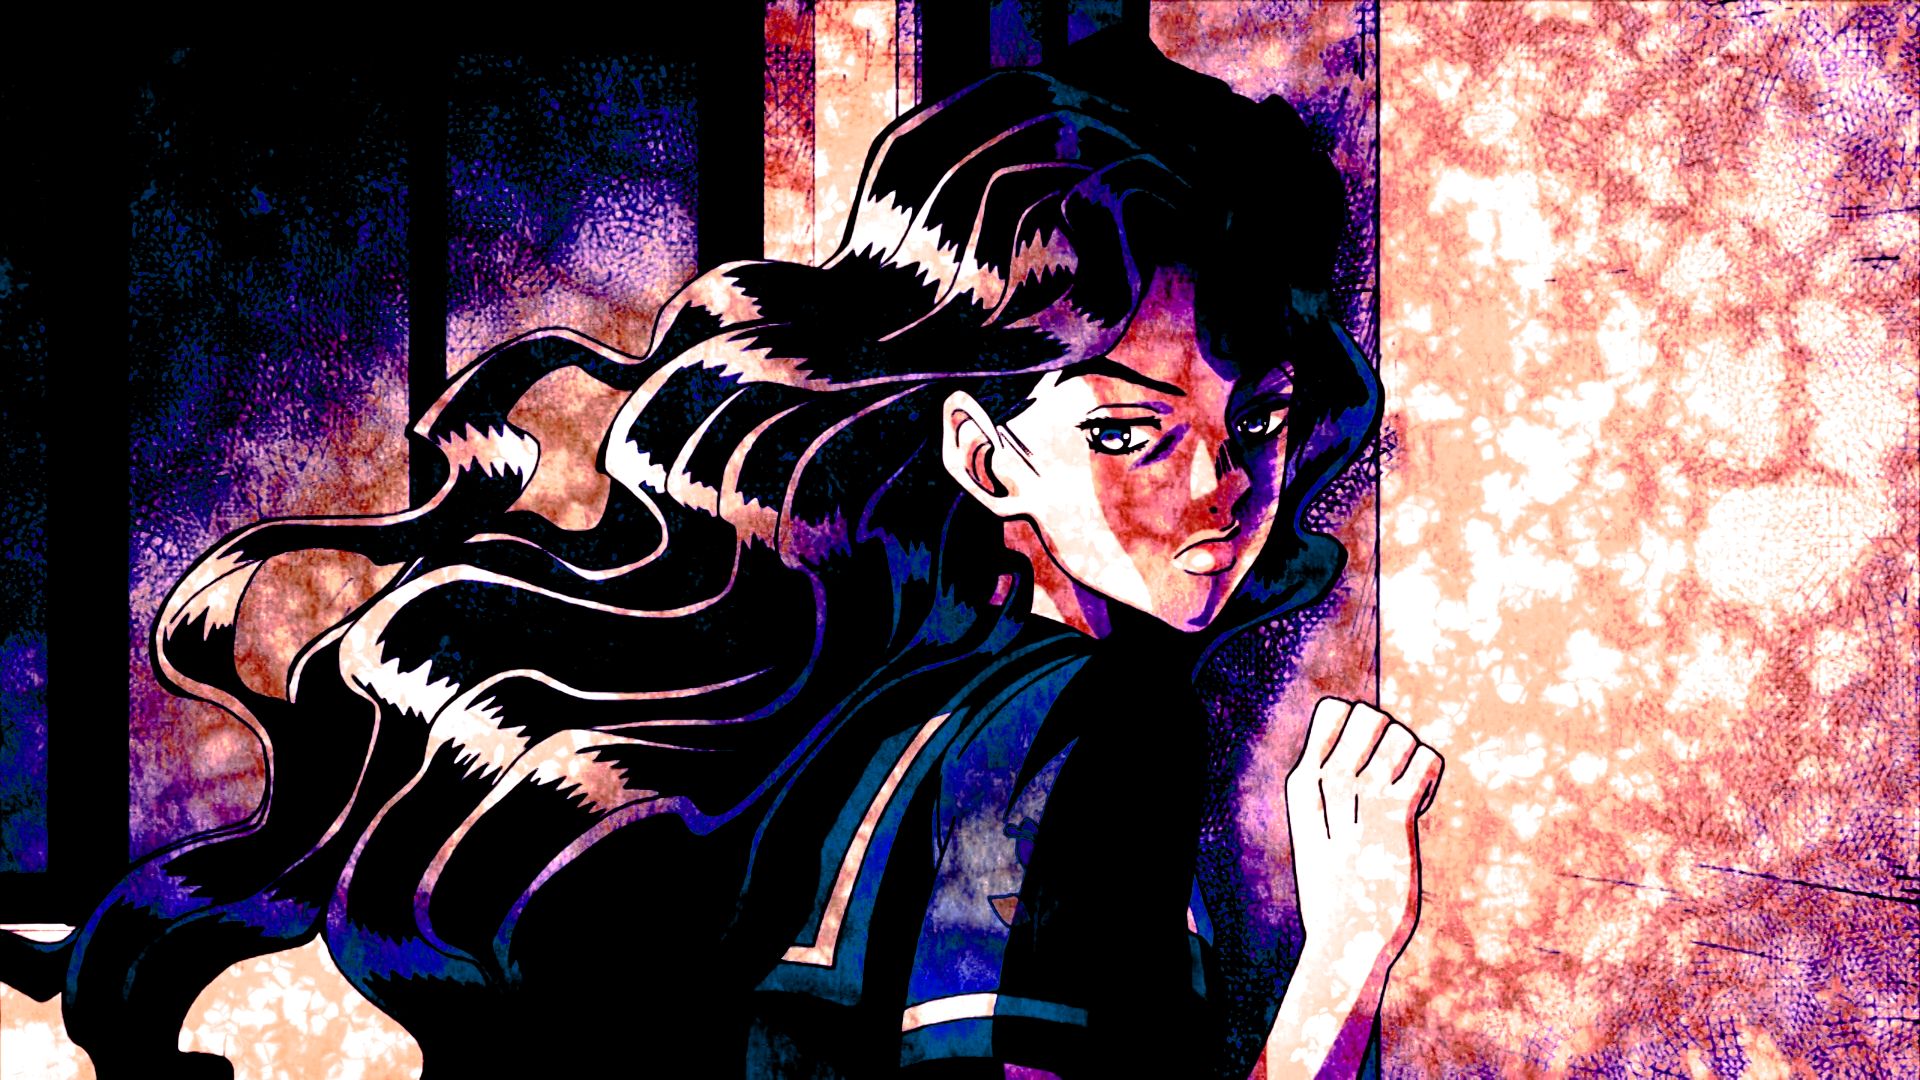 798987 Bild herunterladen animes, jojo no kimyō na bōken, yukako yamagishi - Hintergrundbilder und Bildschirmschoner kostenlos